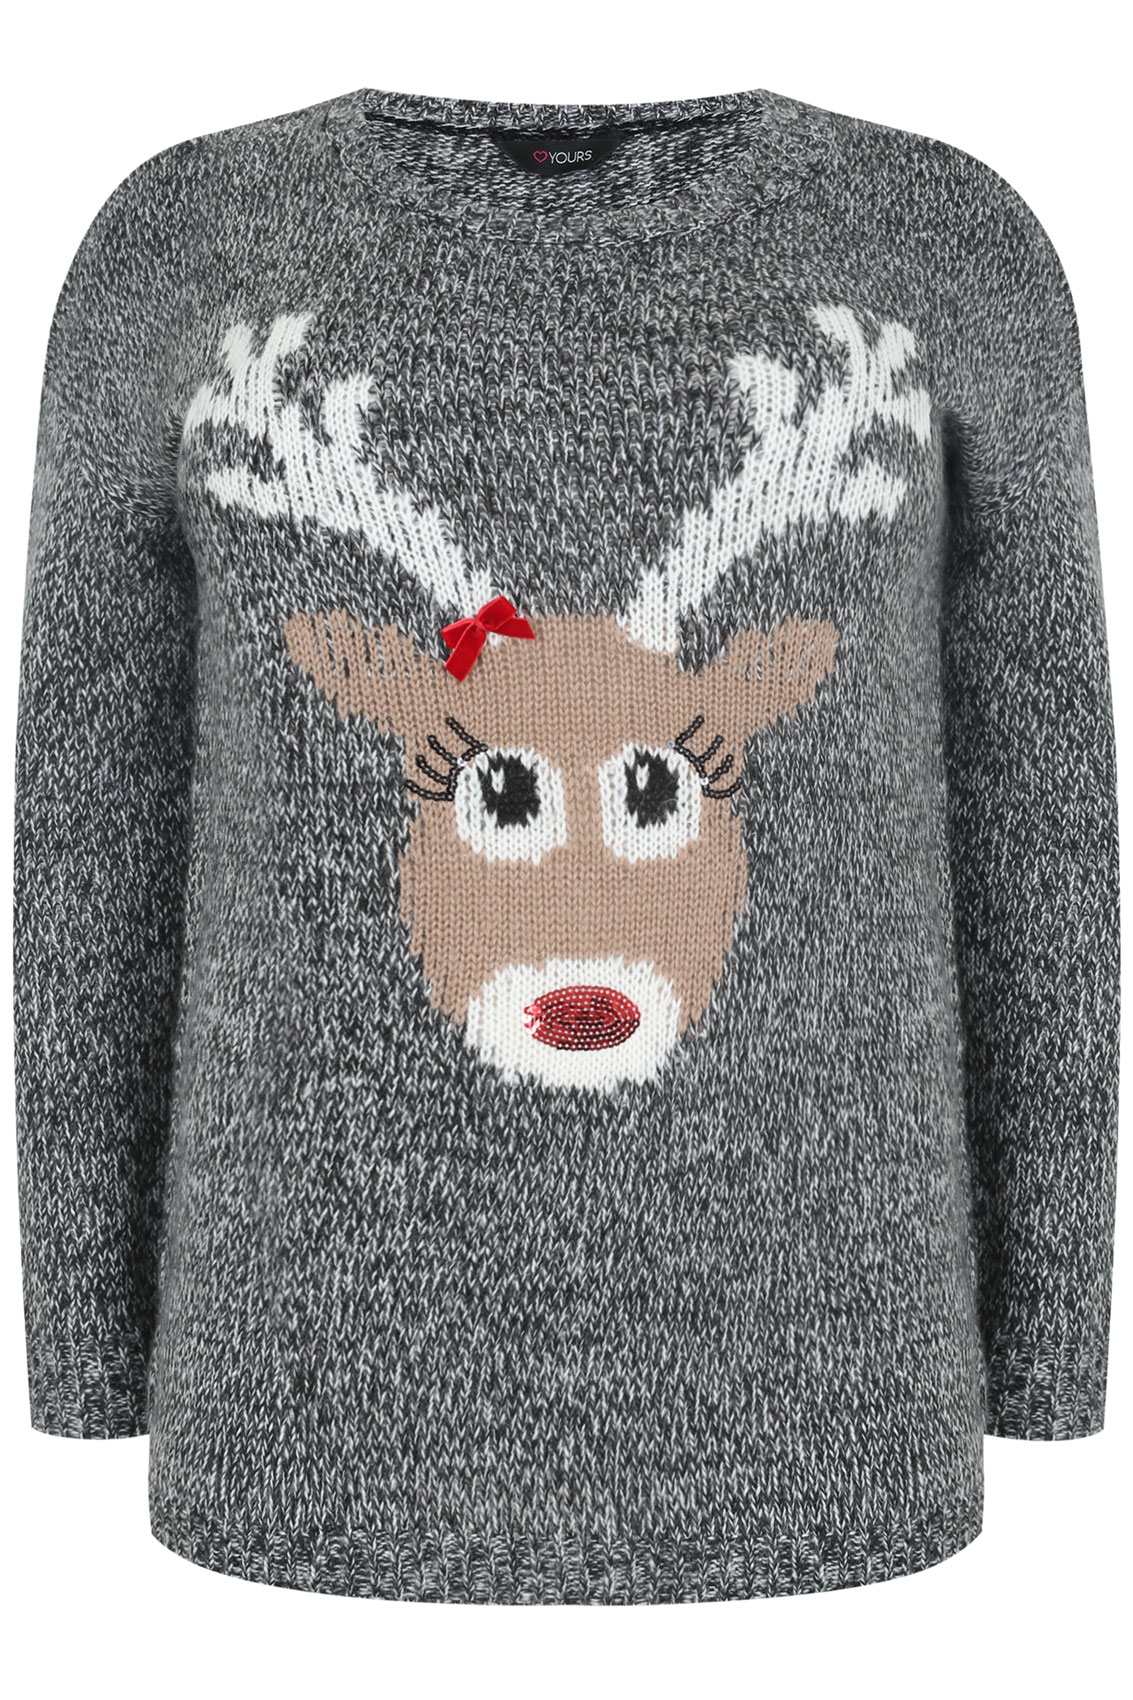 Black & White Knitted Reindeer Print Christmas Jumper Plus ...